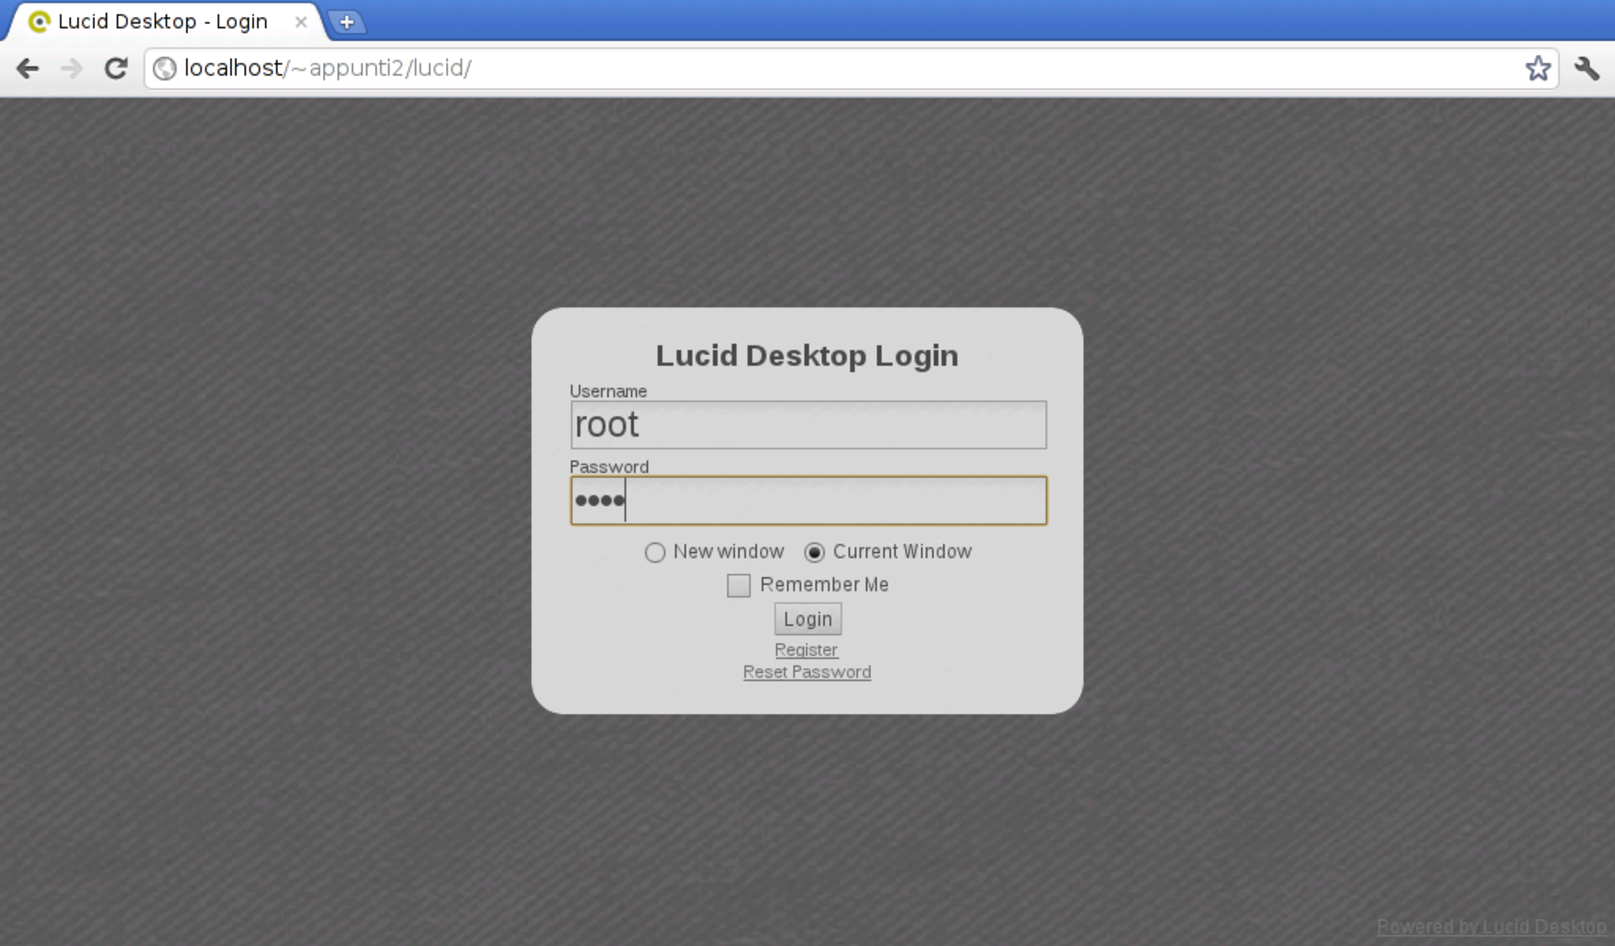 Lucid desktop: login